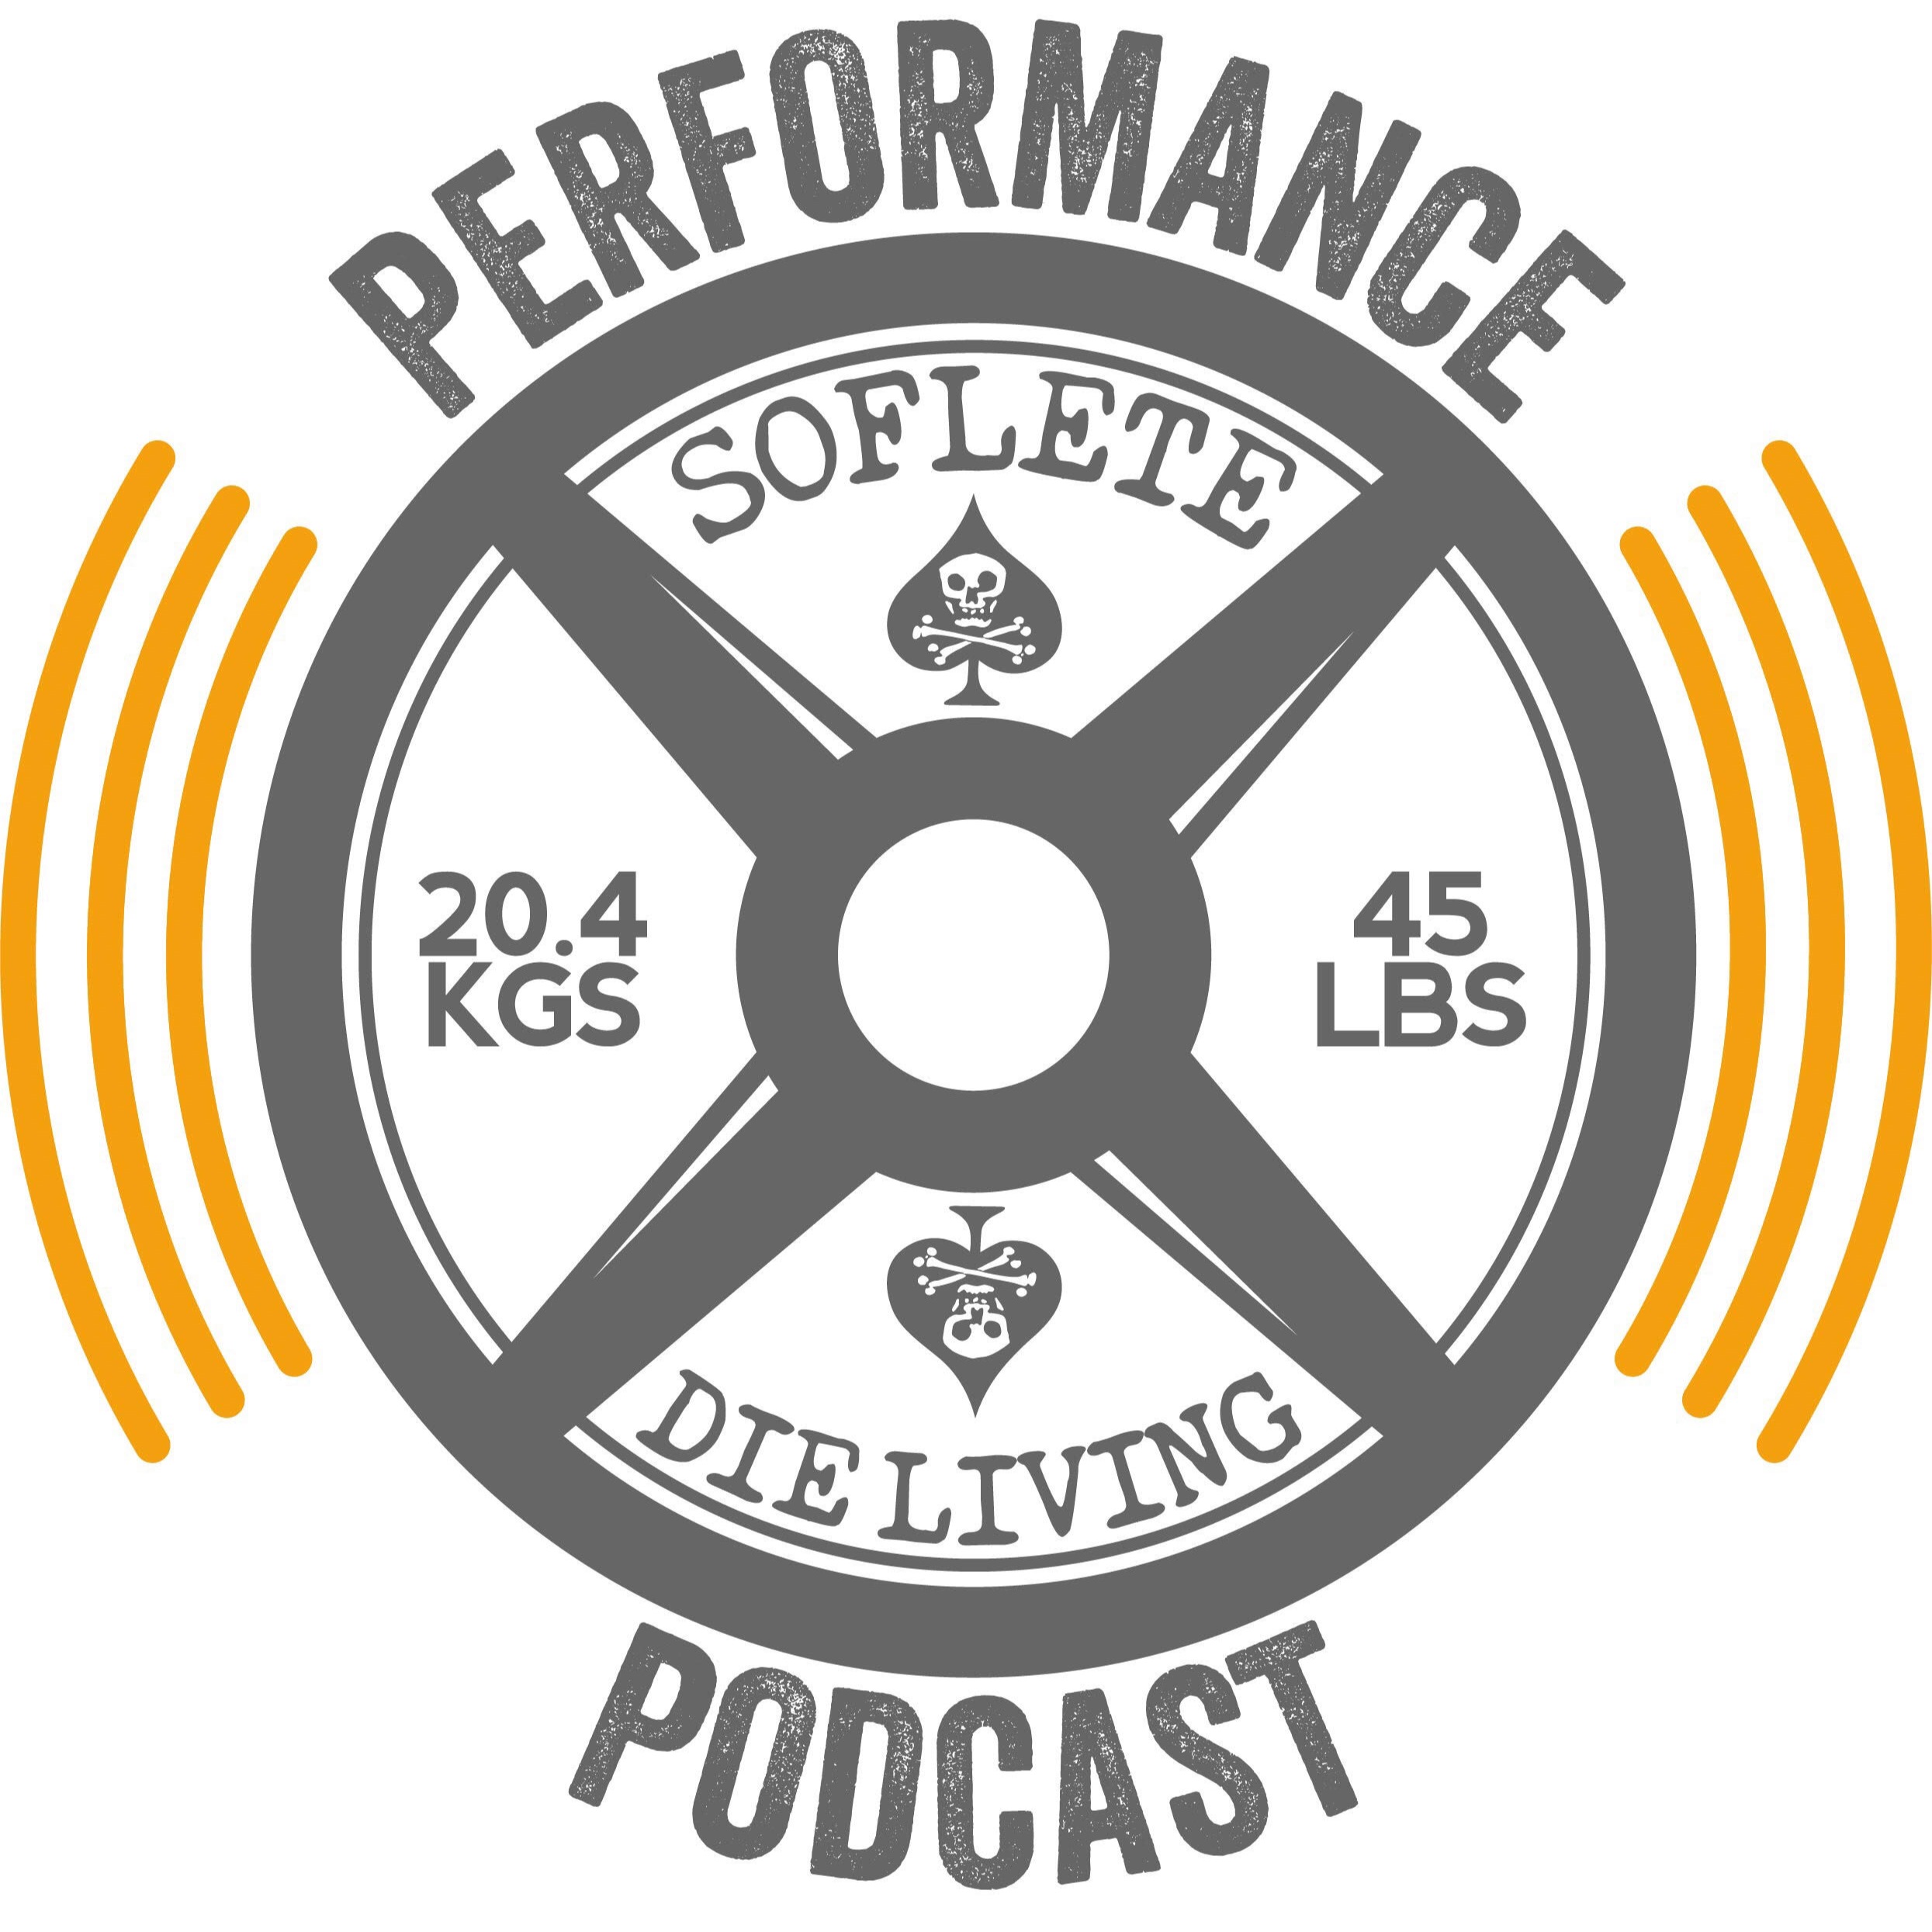 SOFLETE Performance Podcast